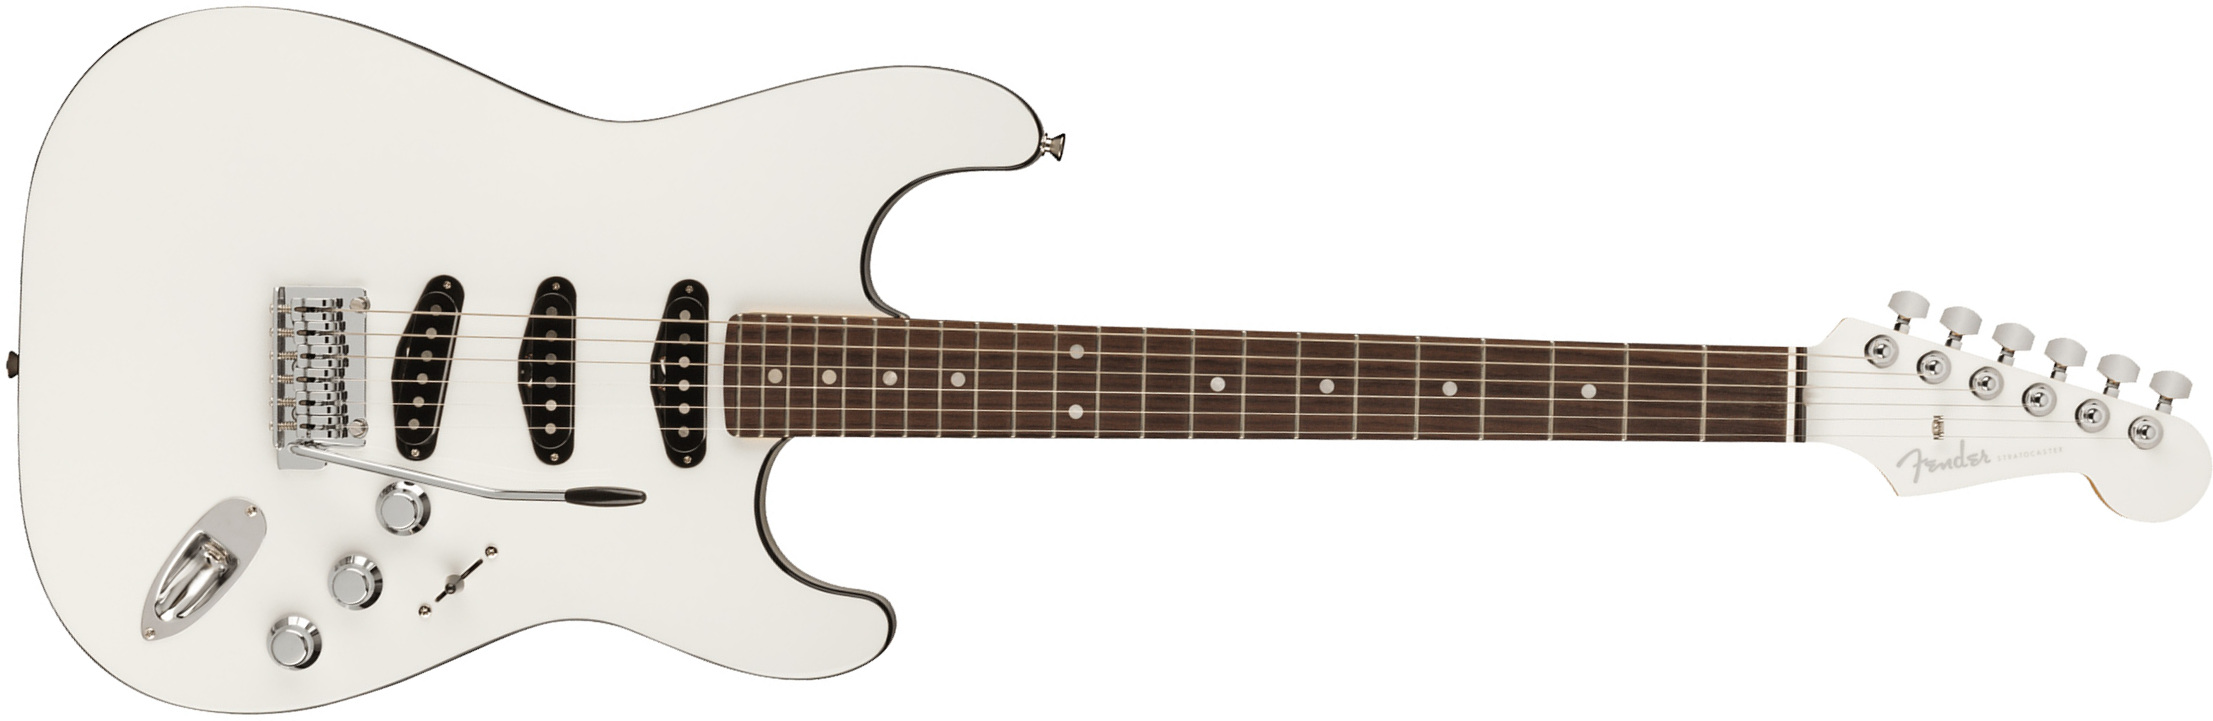 Fender Strat Aerodyne Special Jap 3s Trem Rw - Bright White - Str shape electric guitar - Main picture